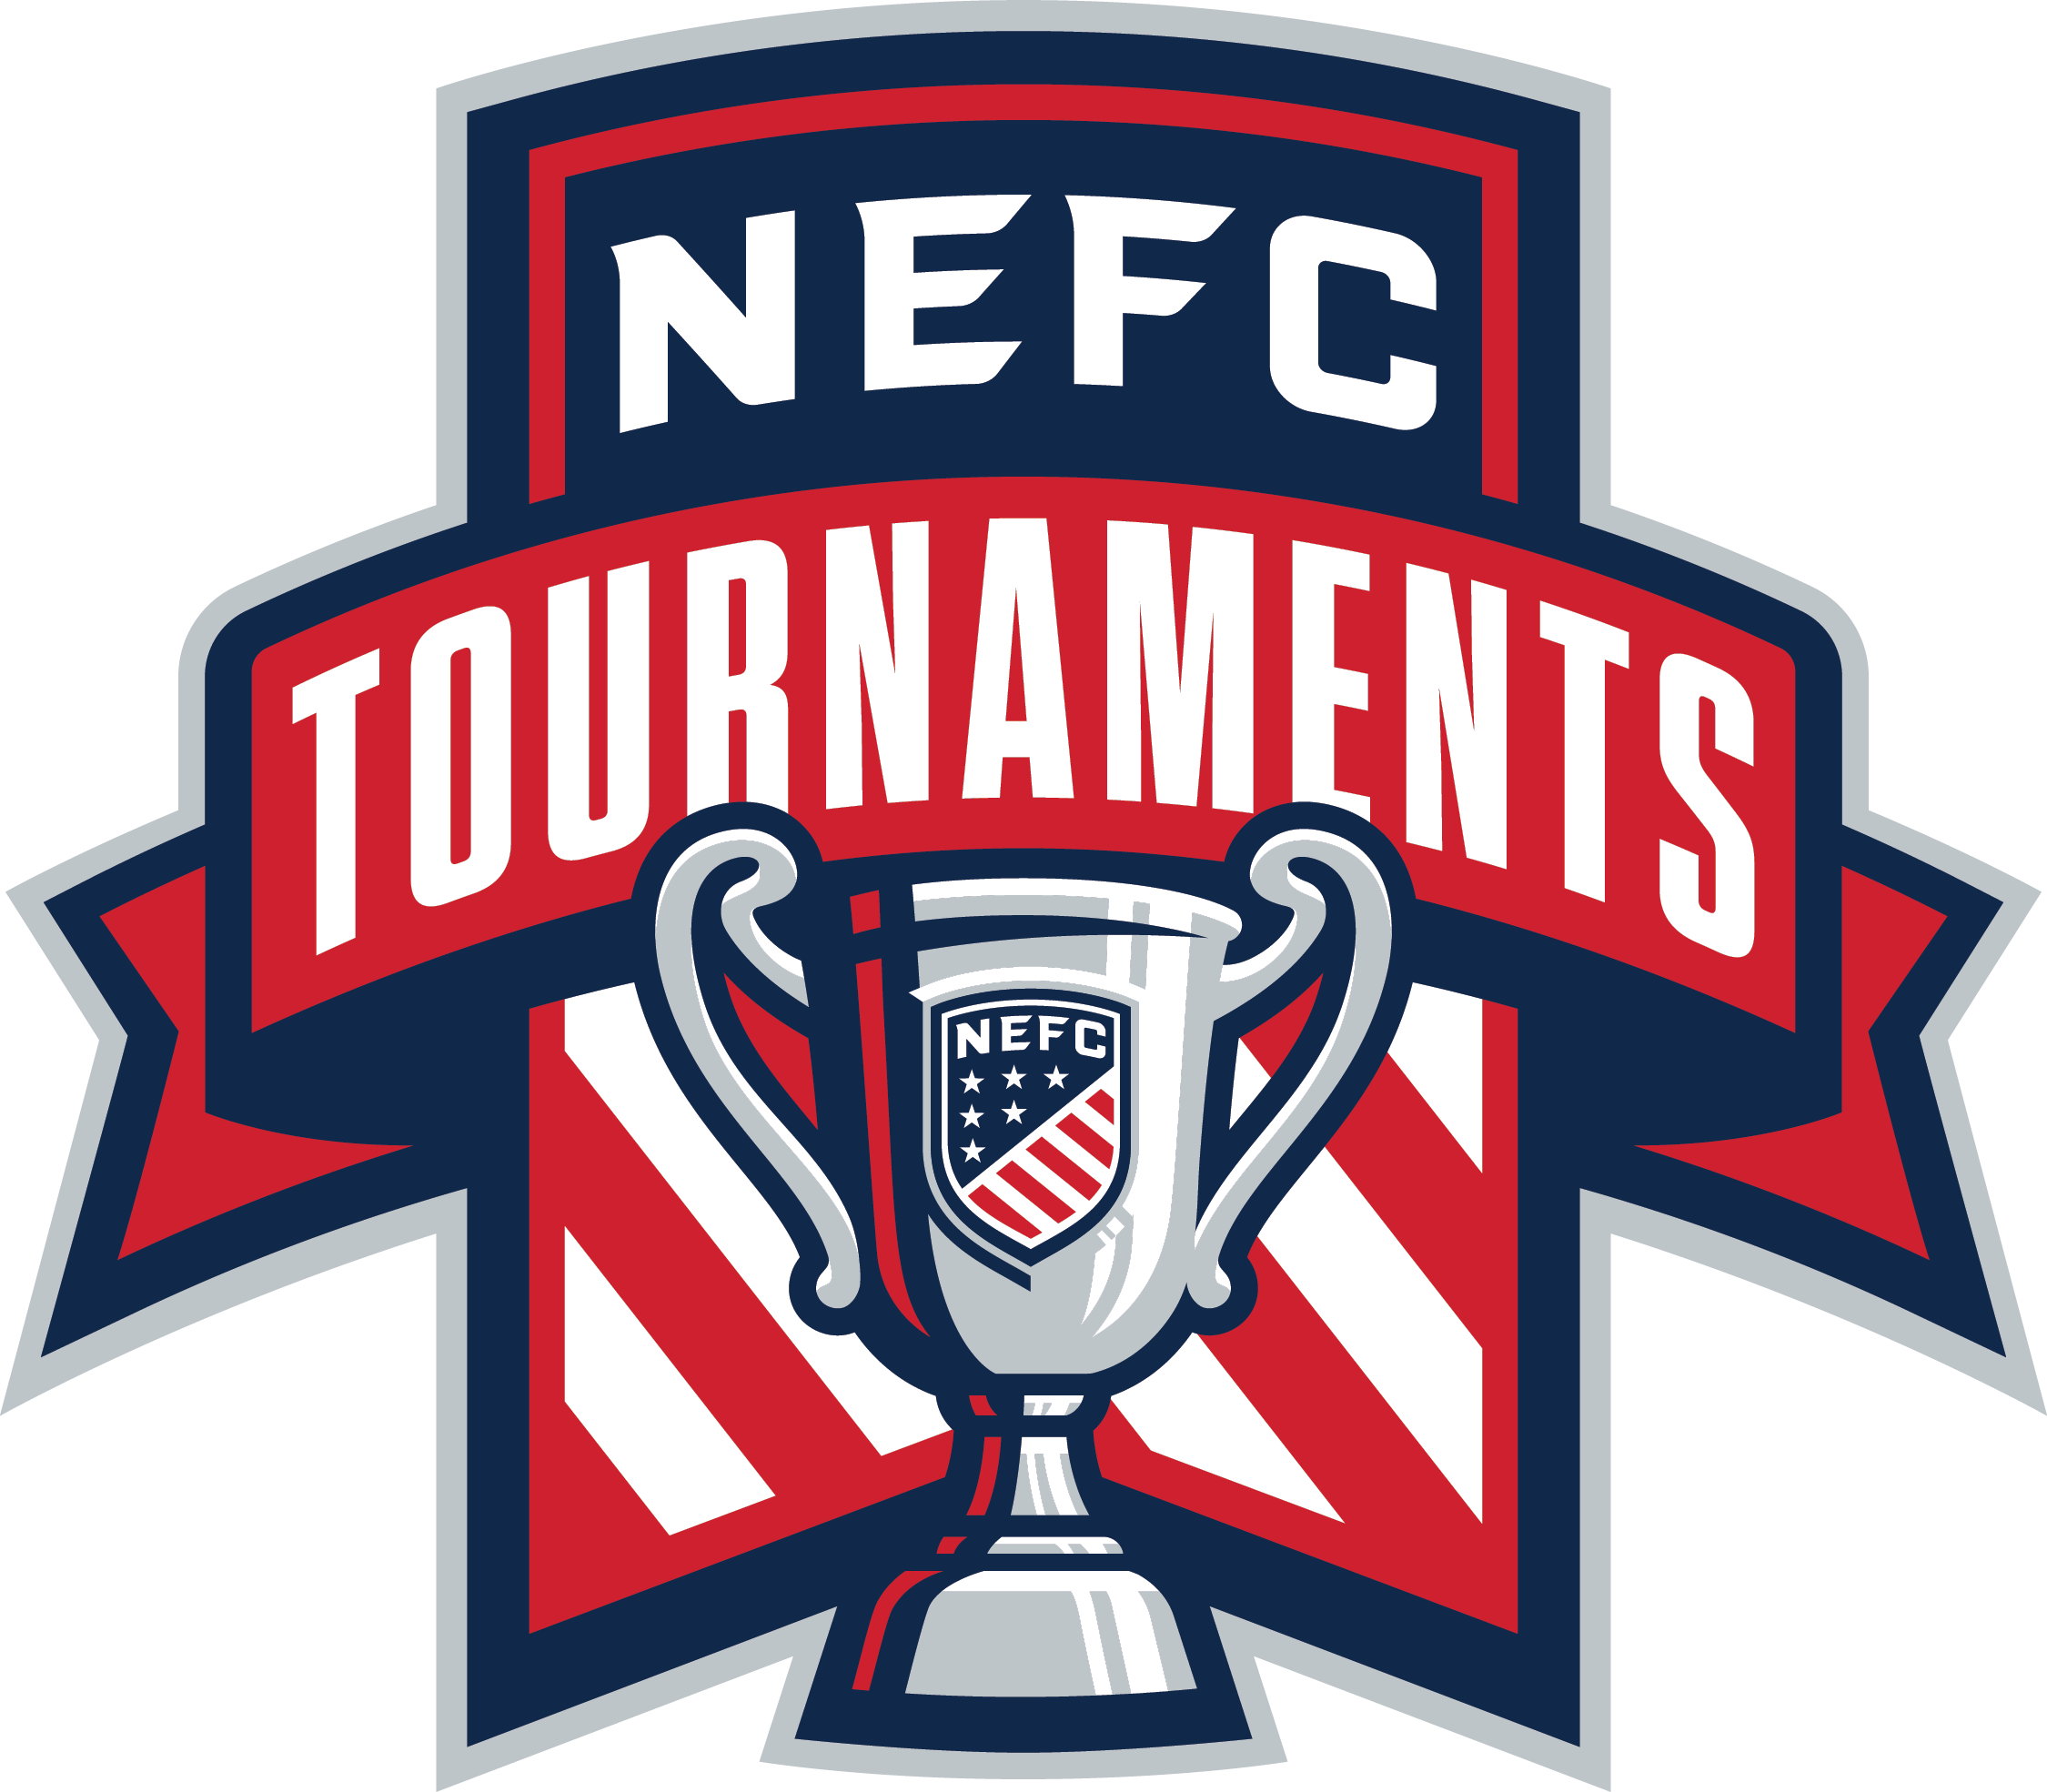 NEFC_Tournaments-Logo_FINAL (1)